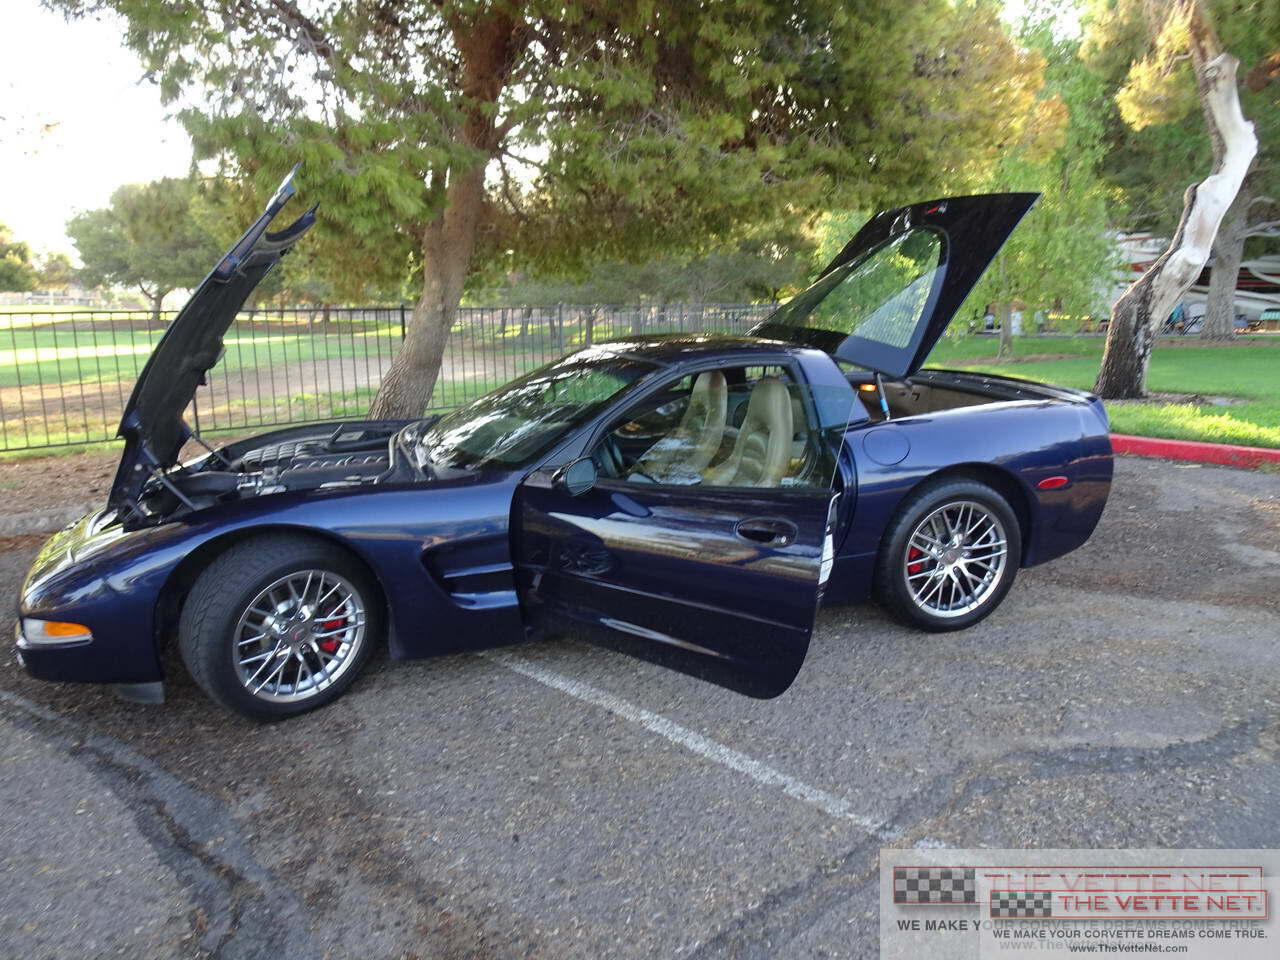 2001 Corvette Coupe Navy Blue Metallic